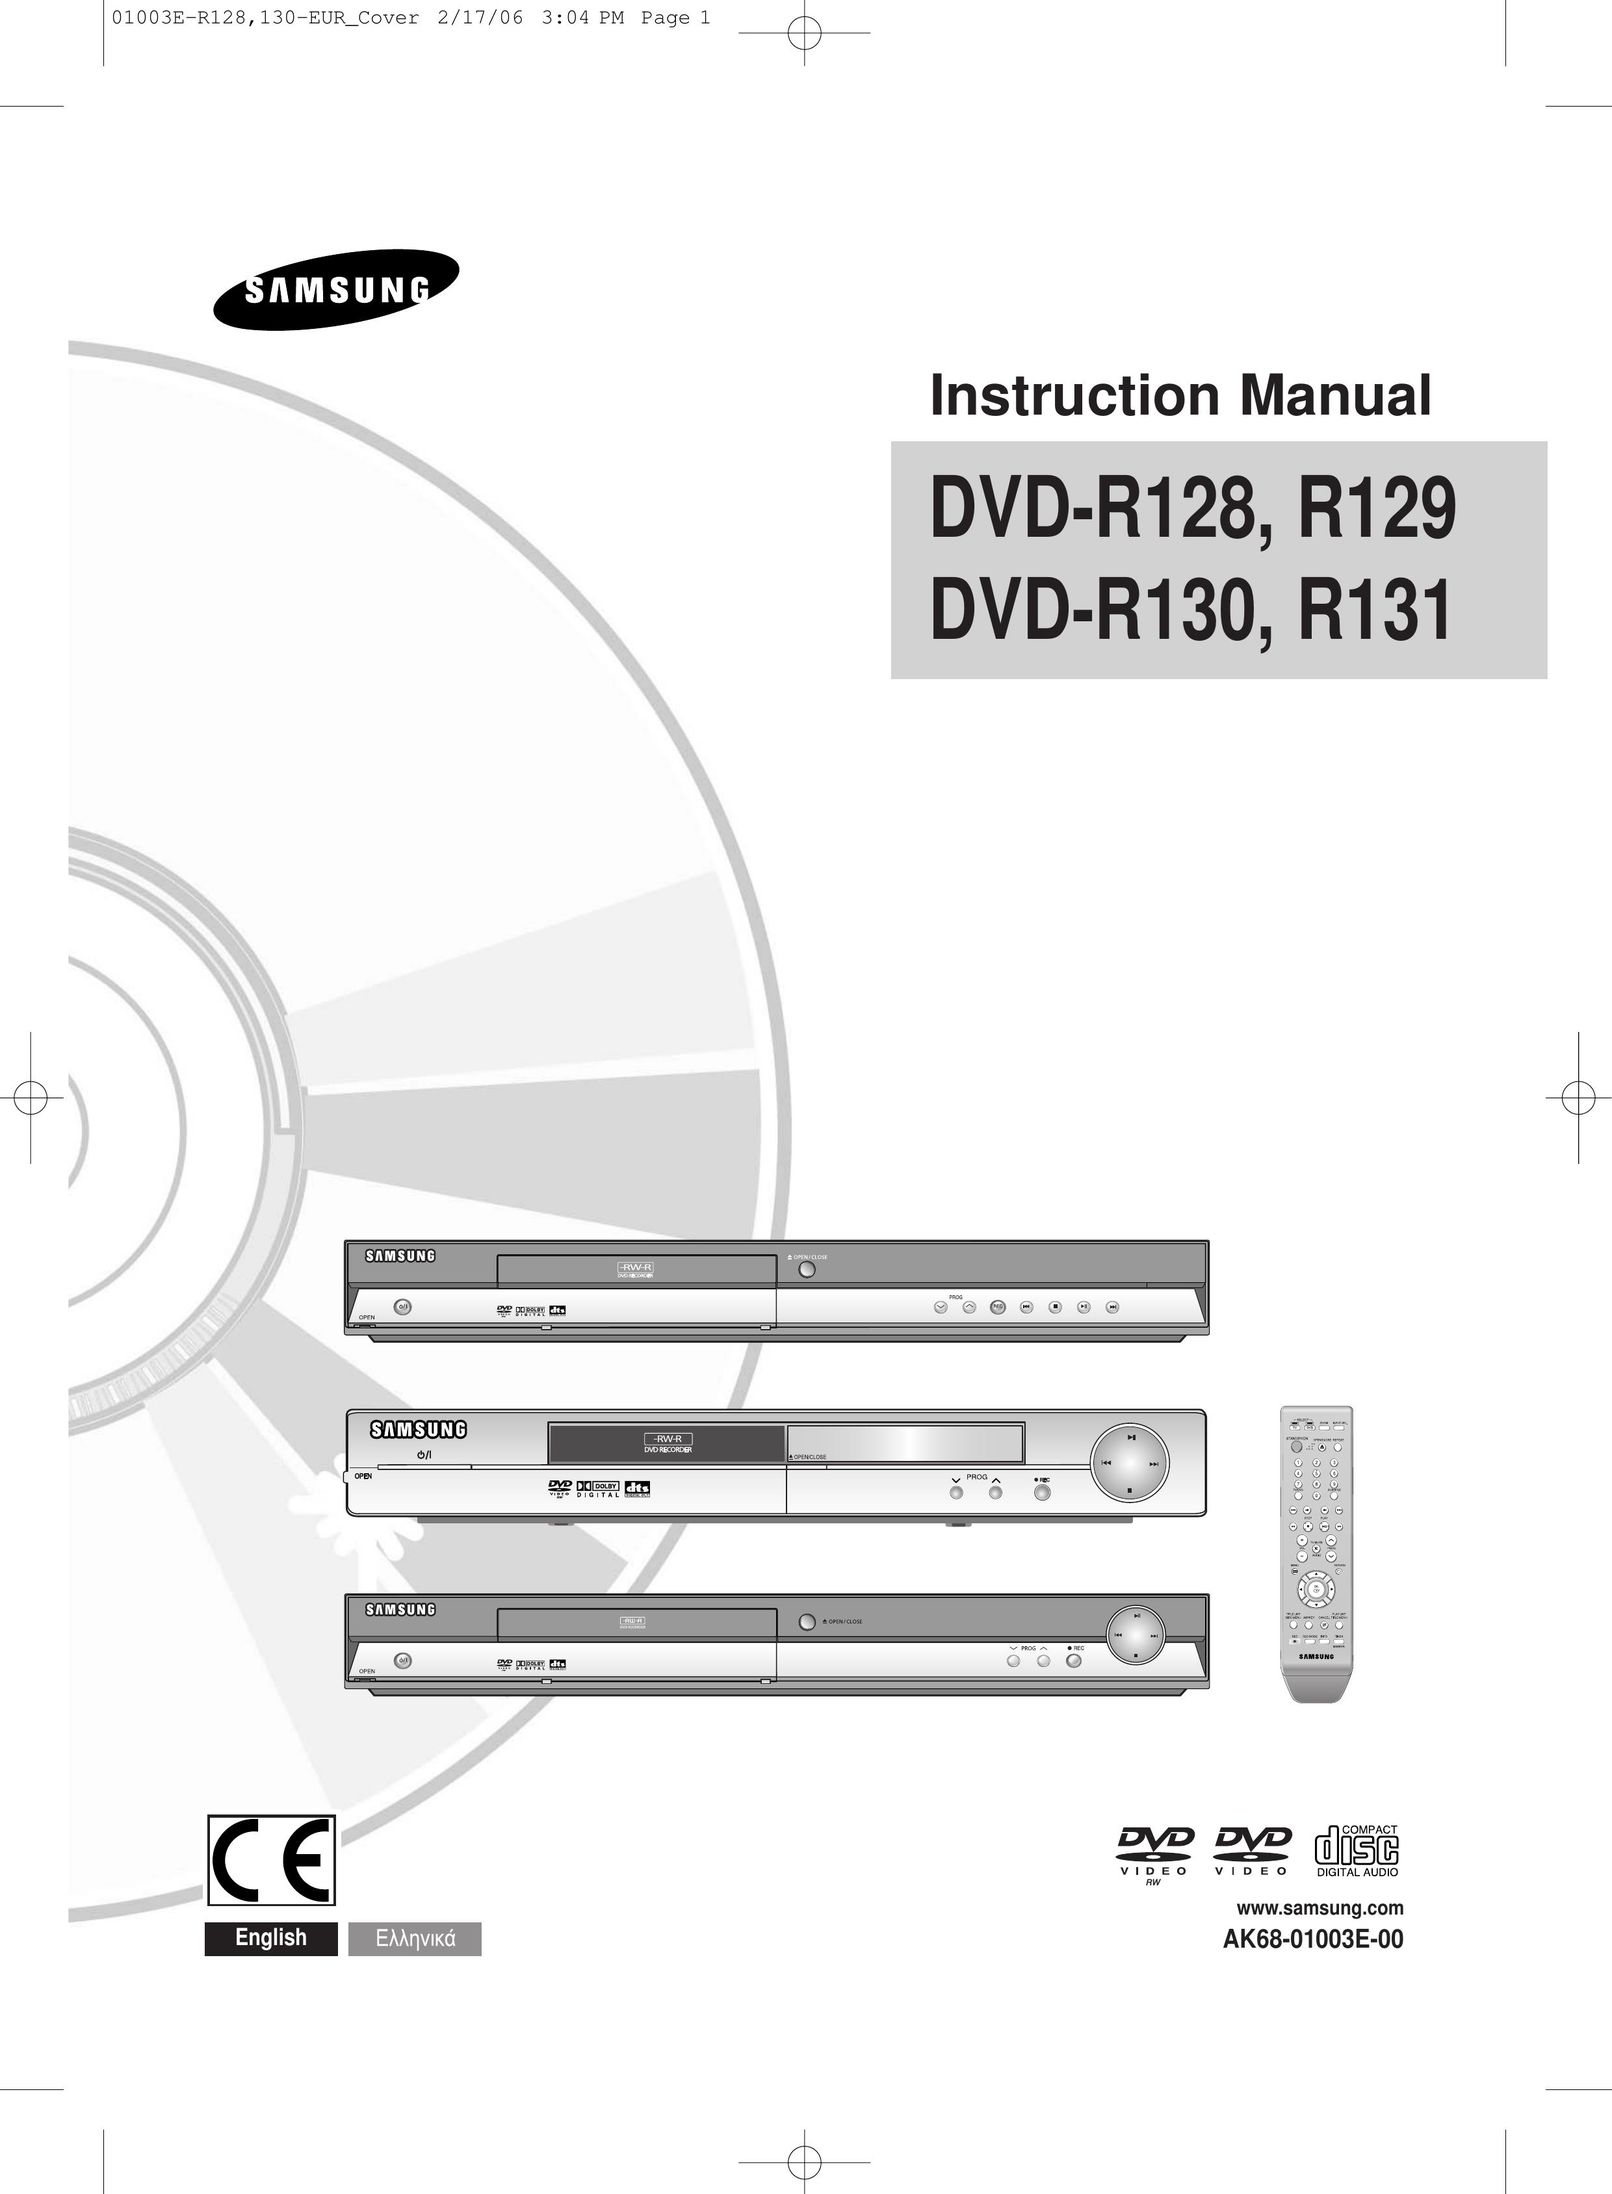 Samsung DVD-R131 DVD Recorder User Manual